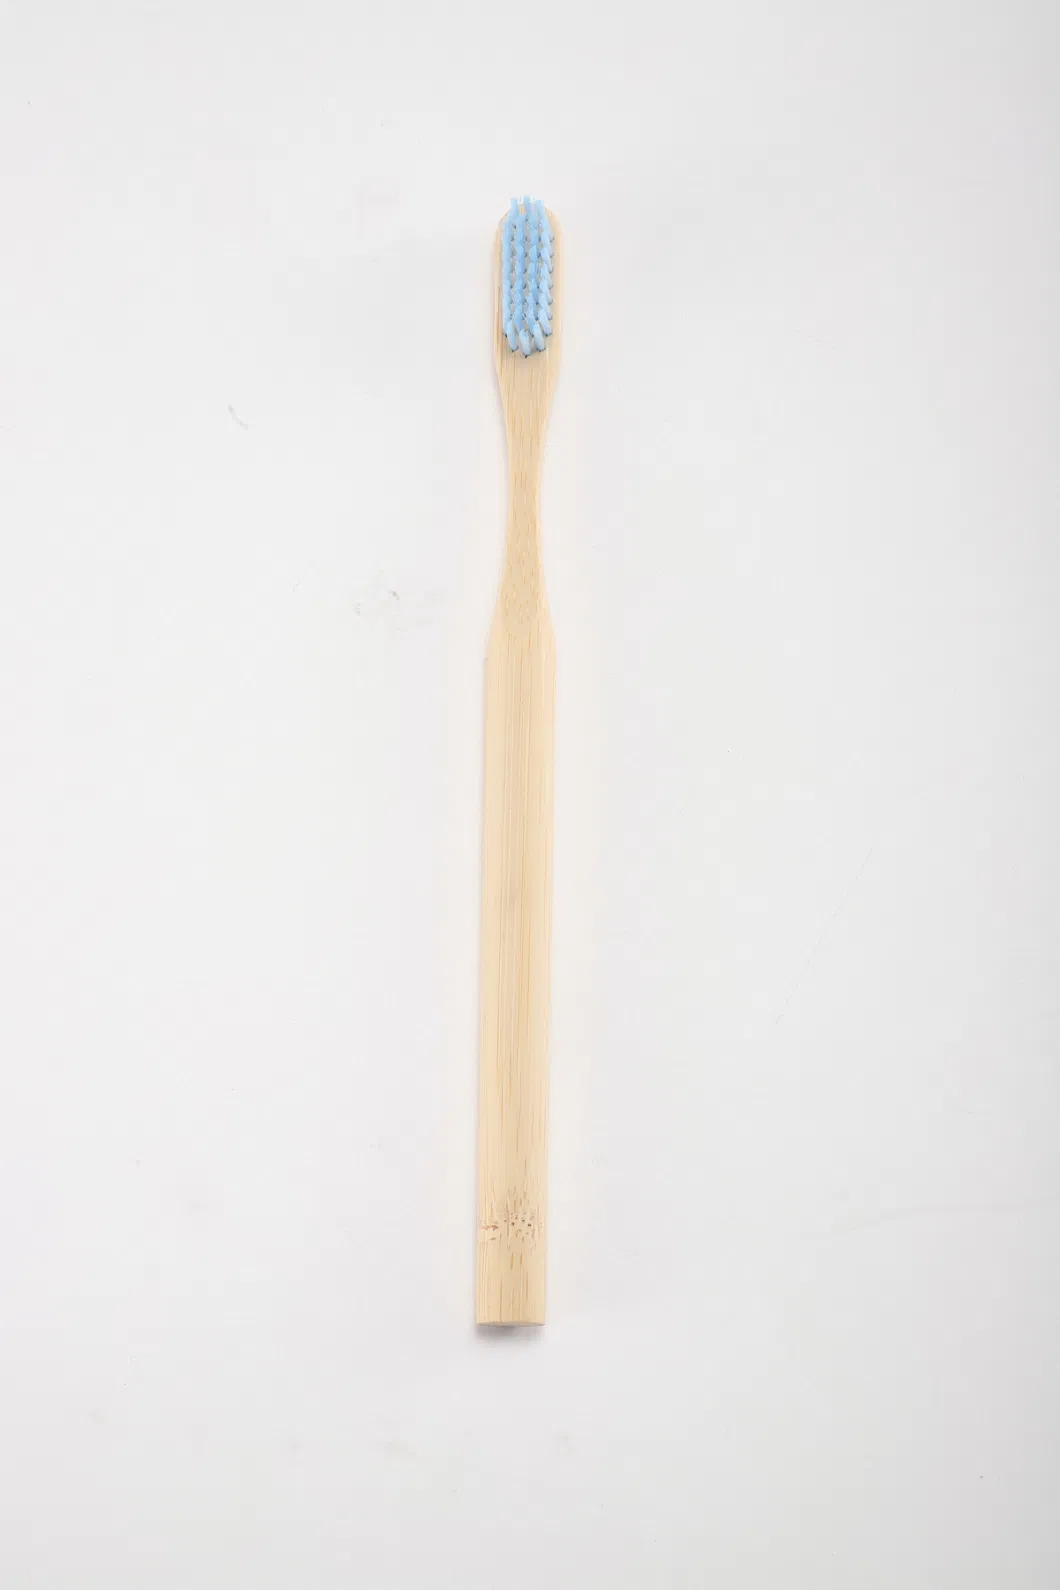 Degradable Bamboo Toothbrush Colorful Fiber Soft Bristle Teeth Brush Cepillo De Bambu Oral Hygiene Clean Care Bambo Tooth Brush